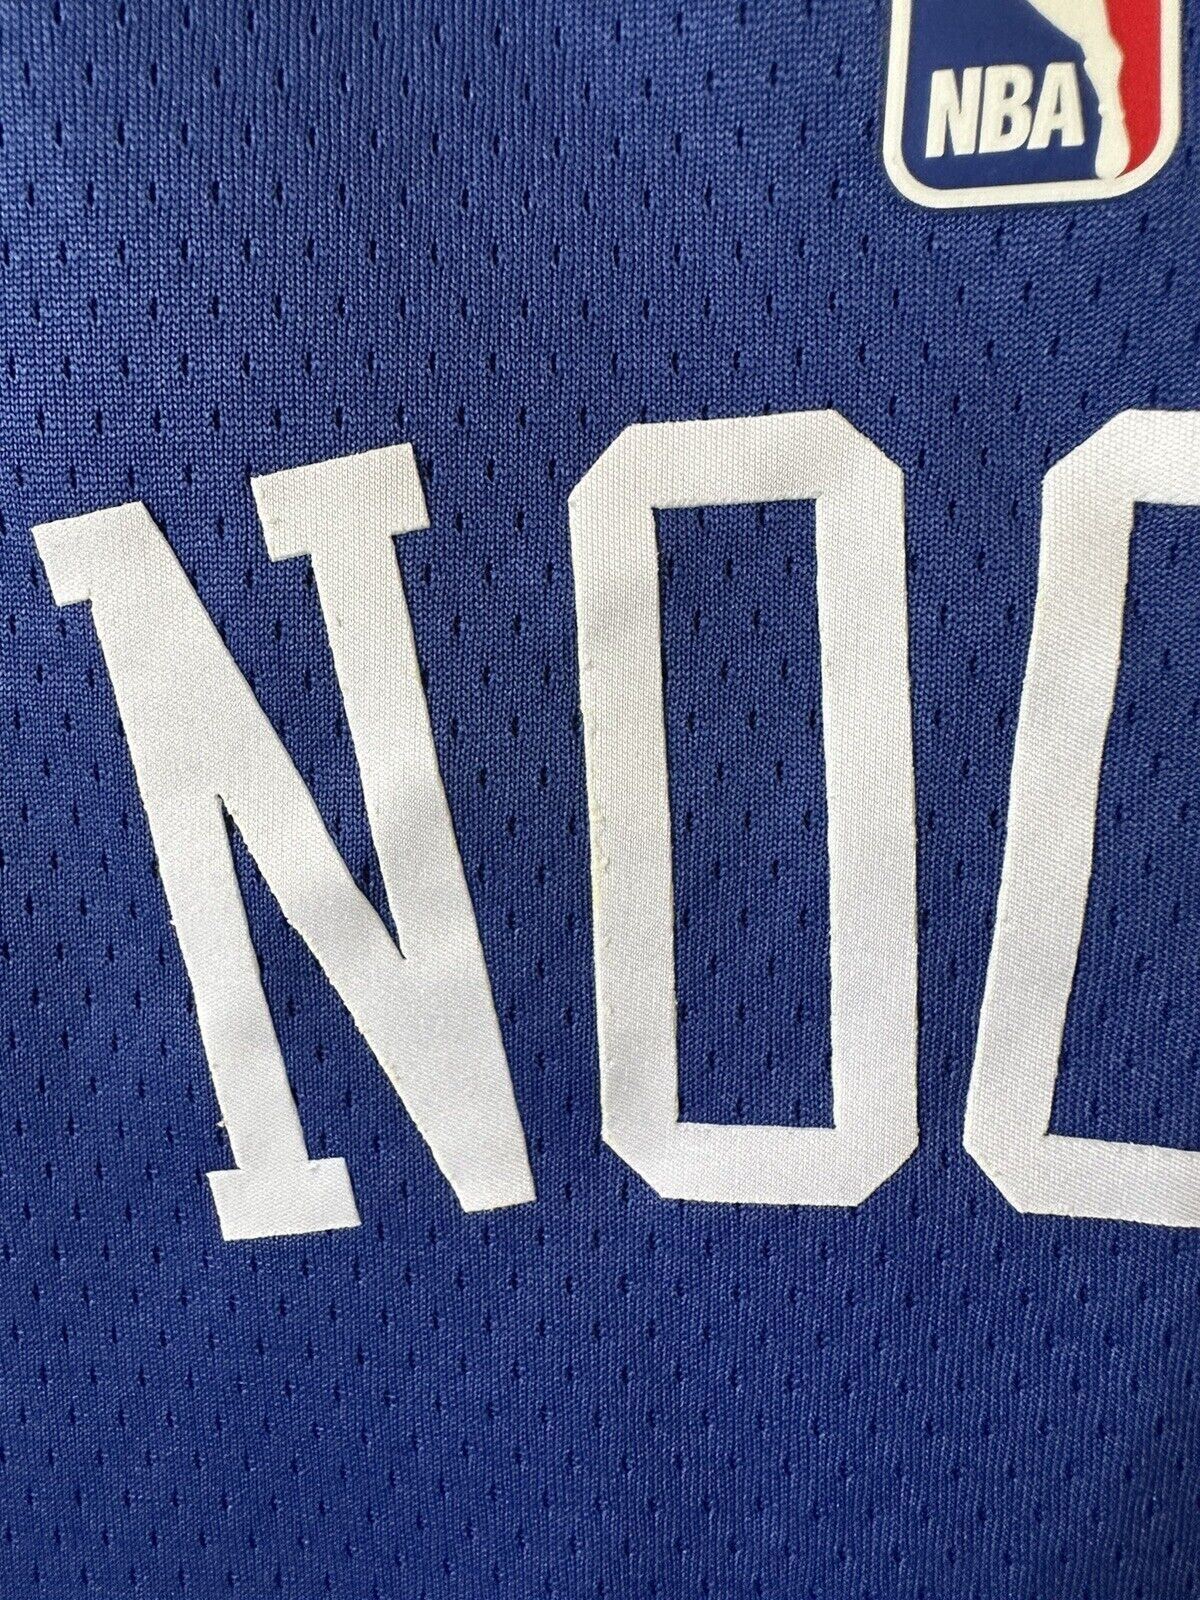 Nike NBA New York Knicks Swingman Jersey NOOR 87 Men’s Medium *DF*